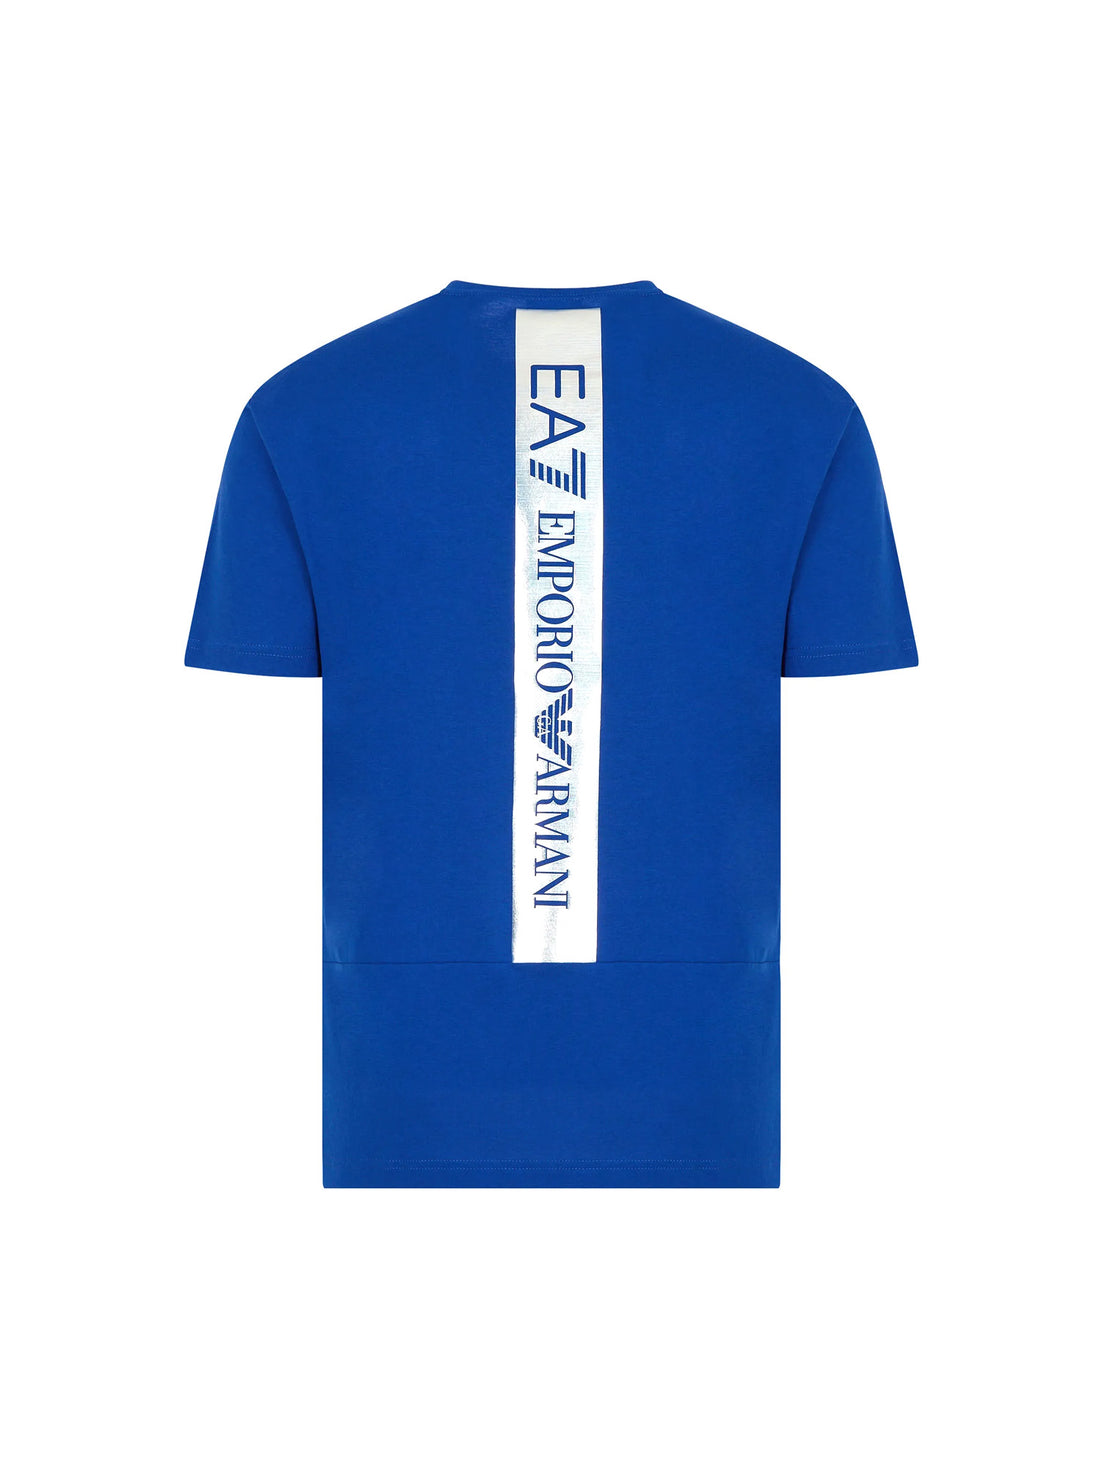 T-shirt Blu Ea7 Emporio Armani